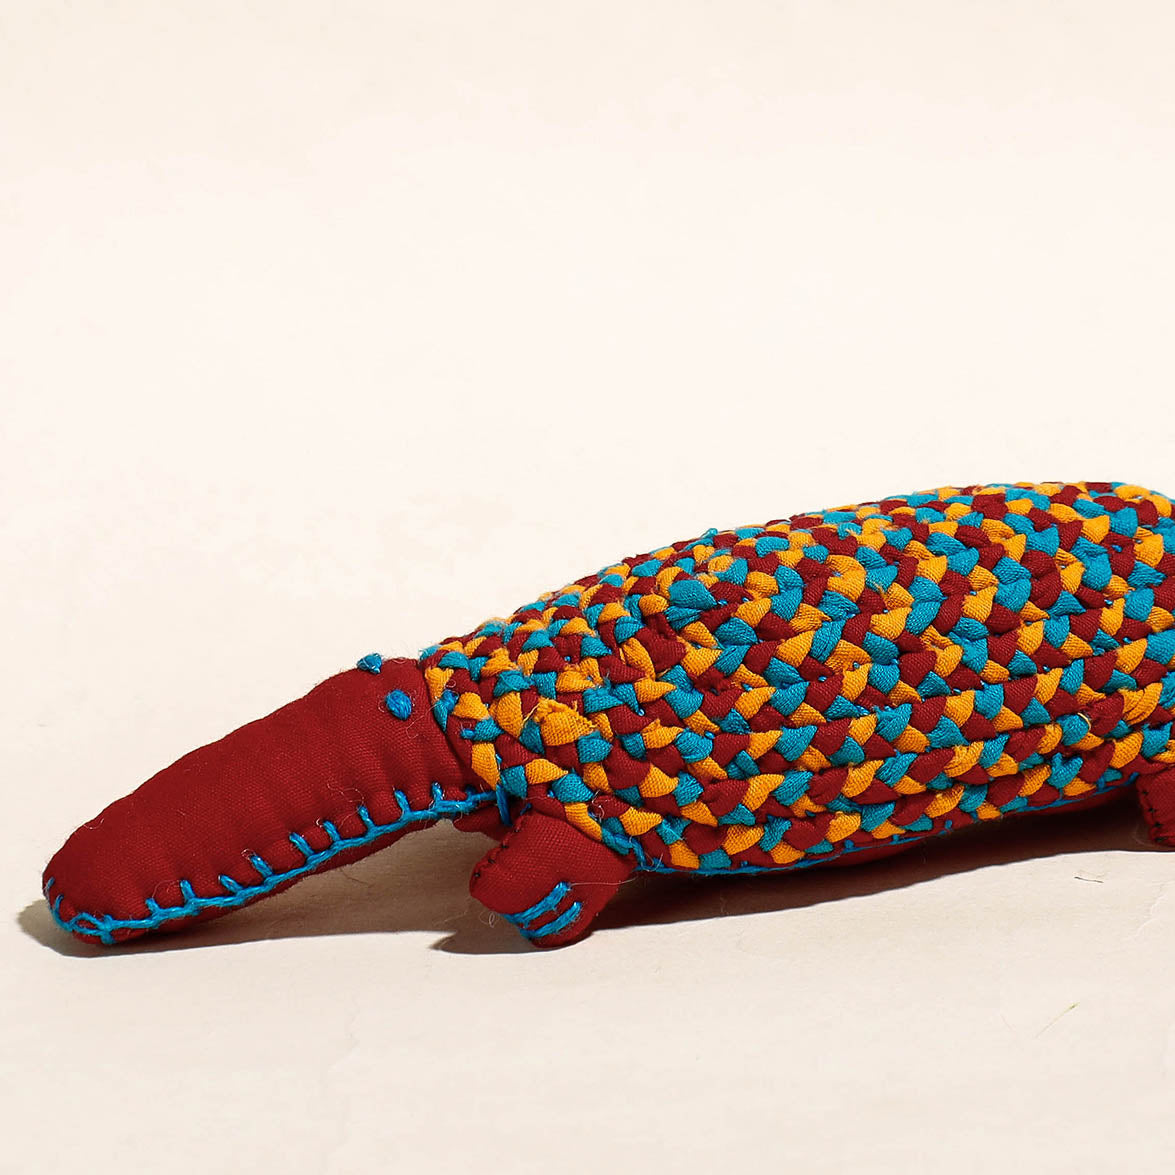 Crocodile - Handmade Stuffed Toy by Dastkar Ranthambhore